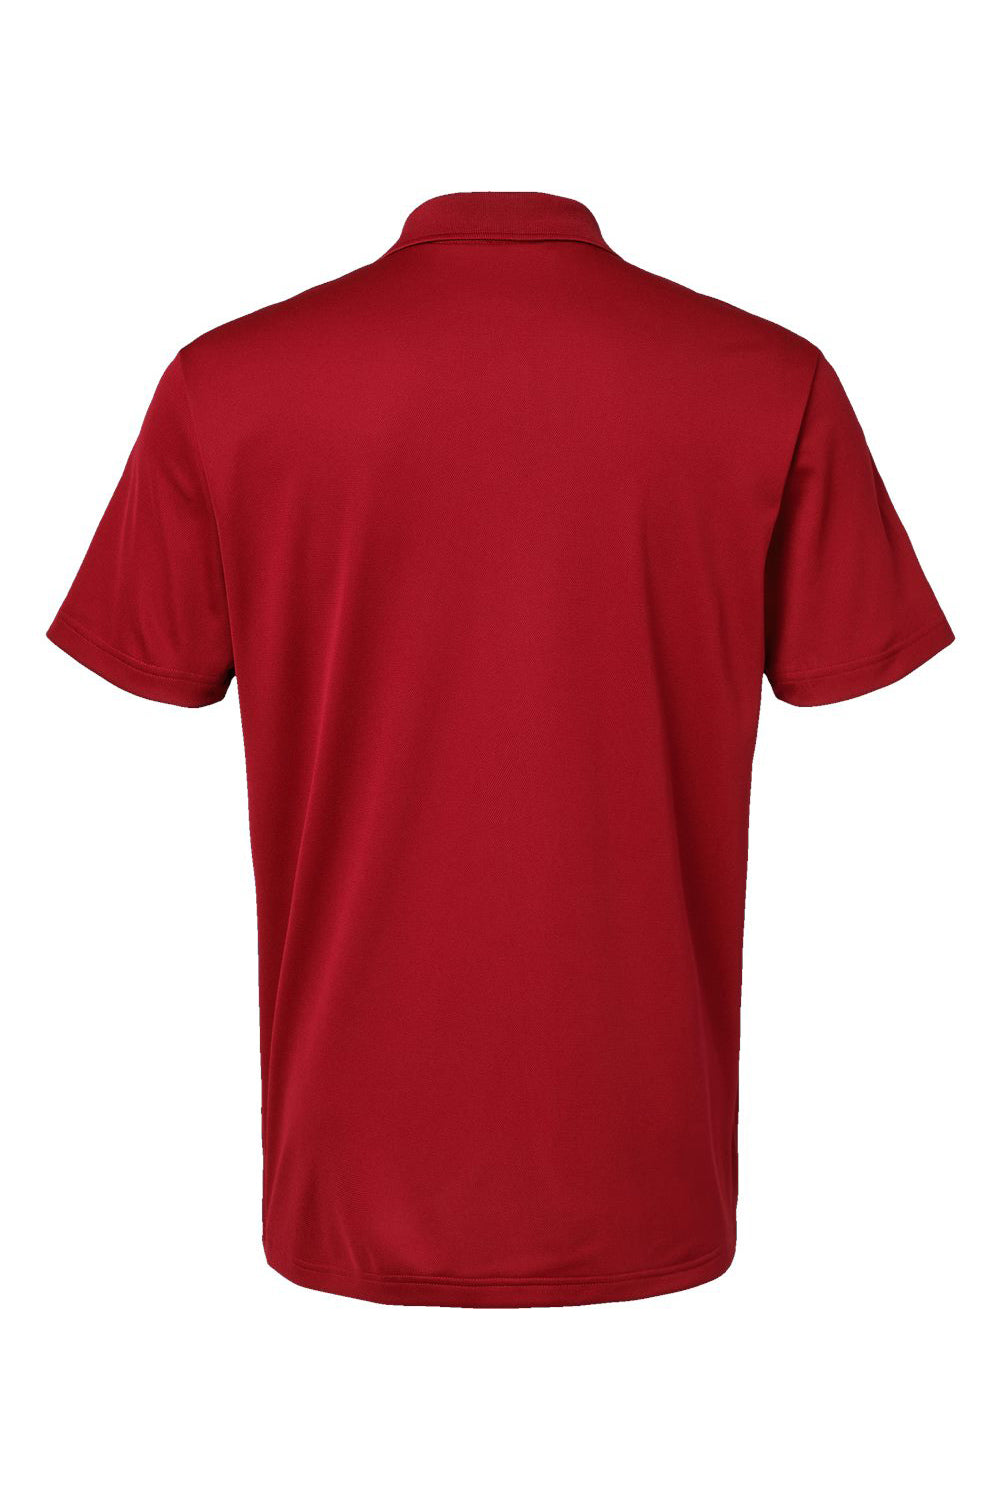 Adidas A430 Mens Basic Short Sleeve Polo Shirt Power Red Flat Back